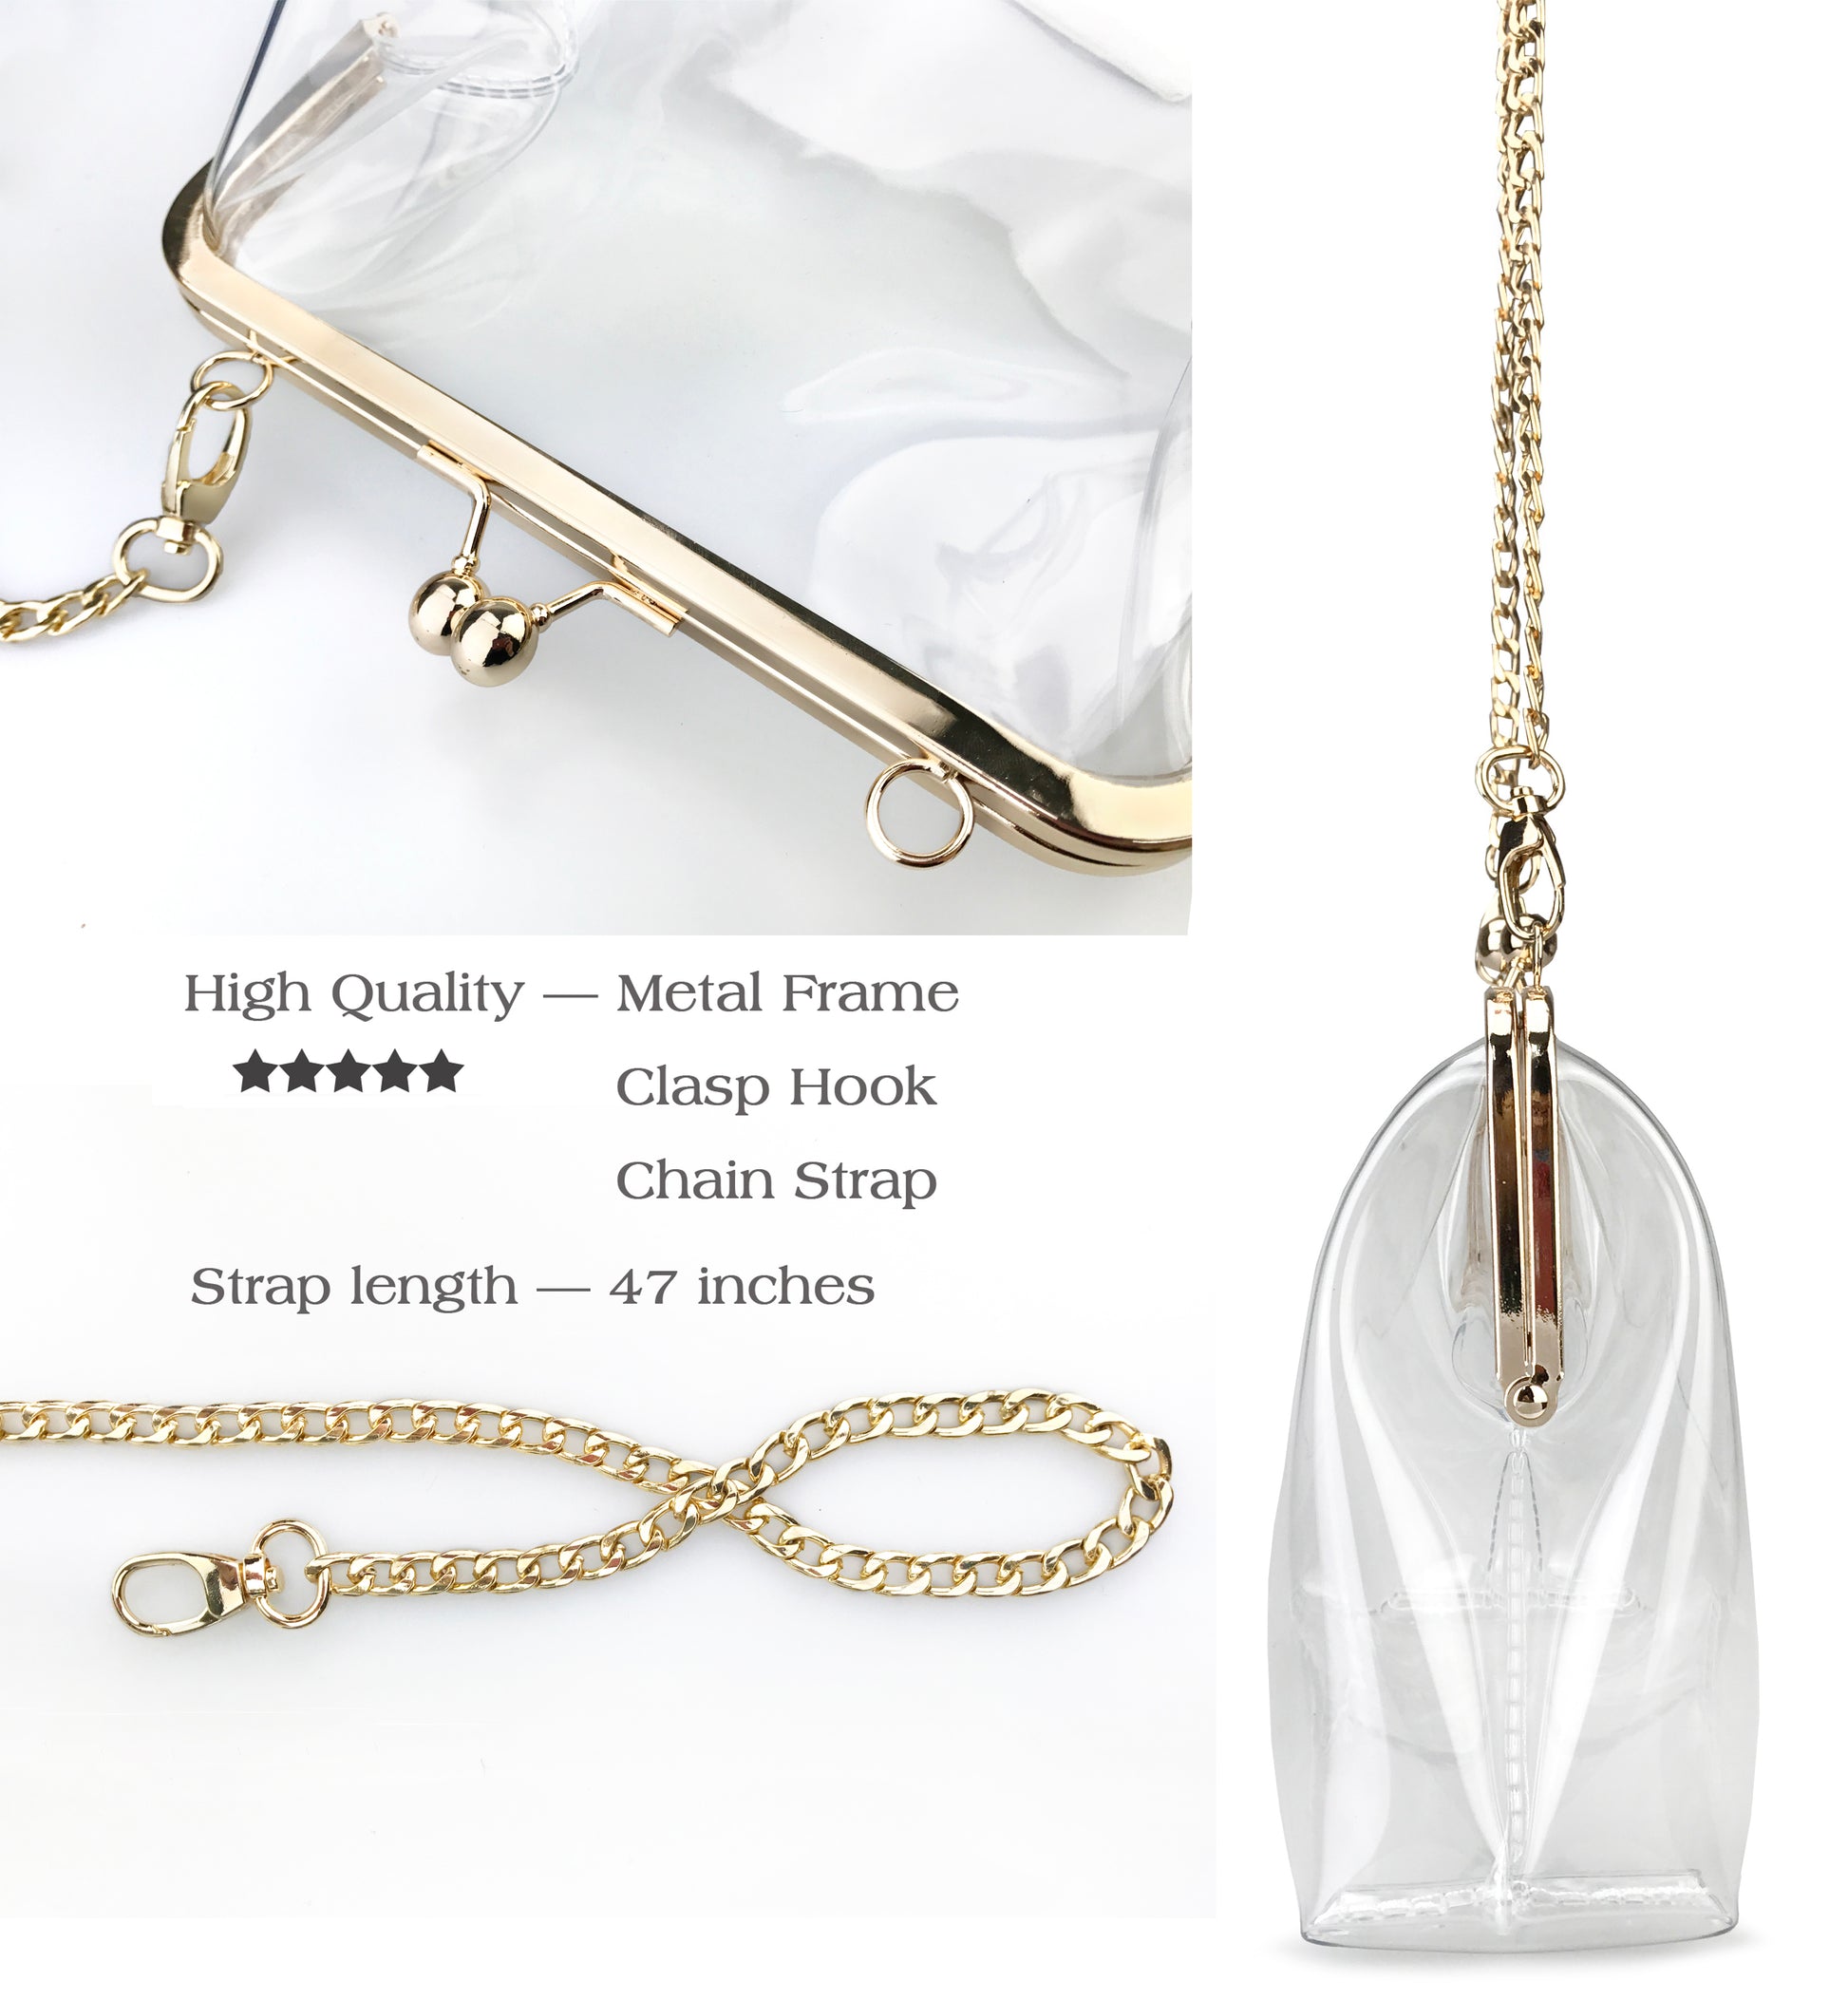 Clear Transparent PVC Kiss Lock Chain Cross Body Bag Womens Clutch